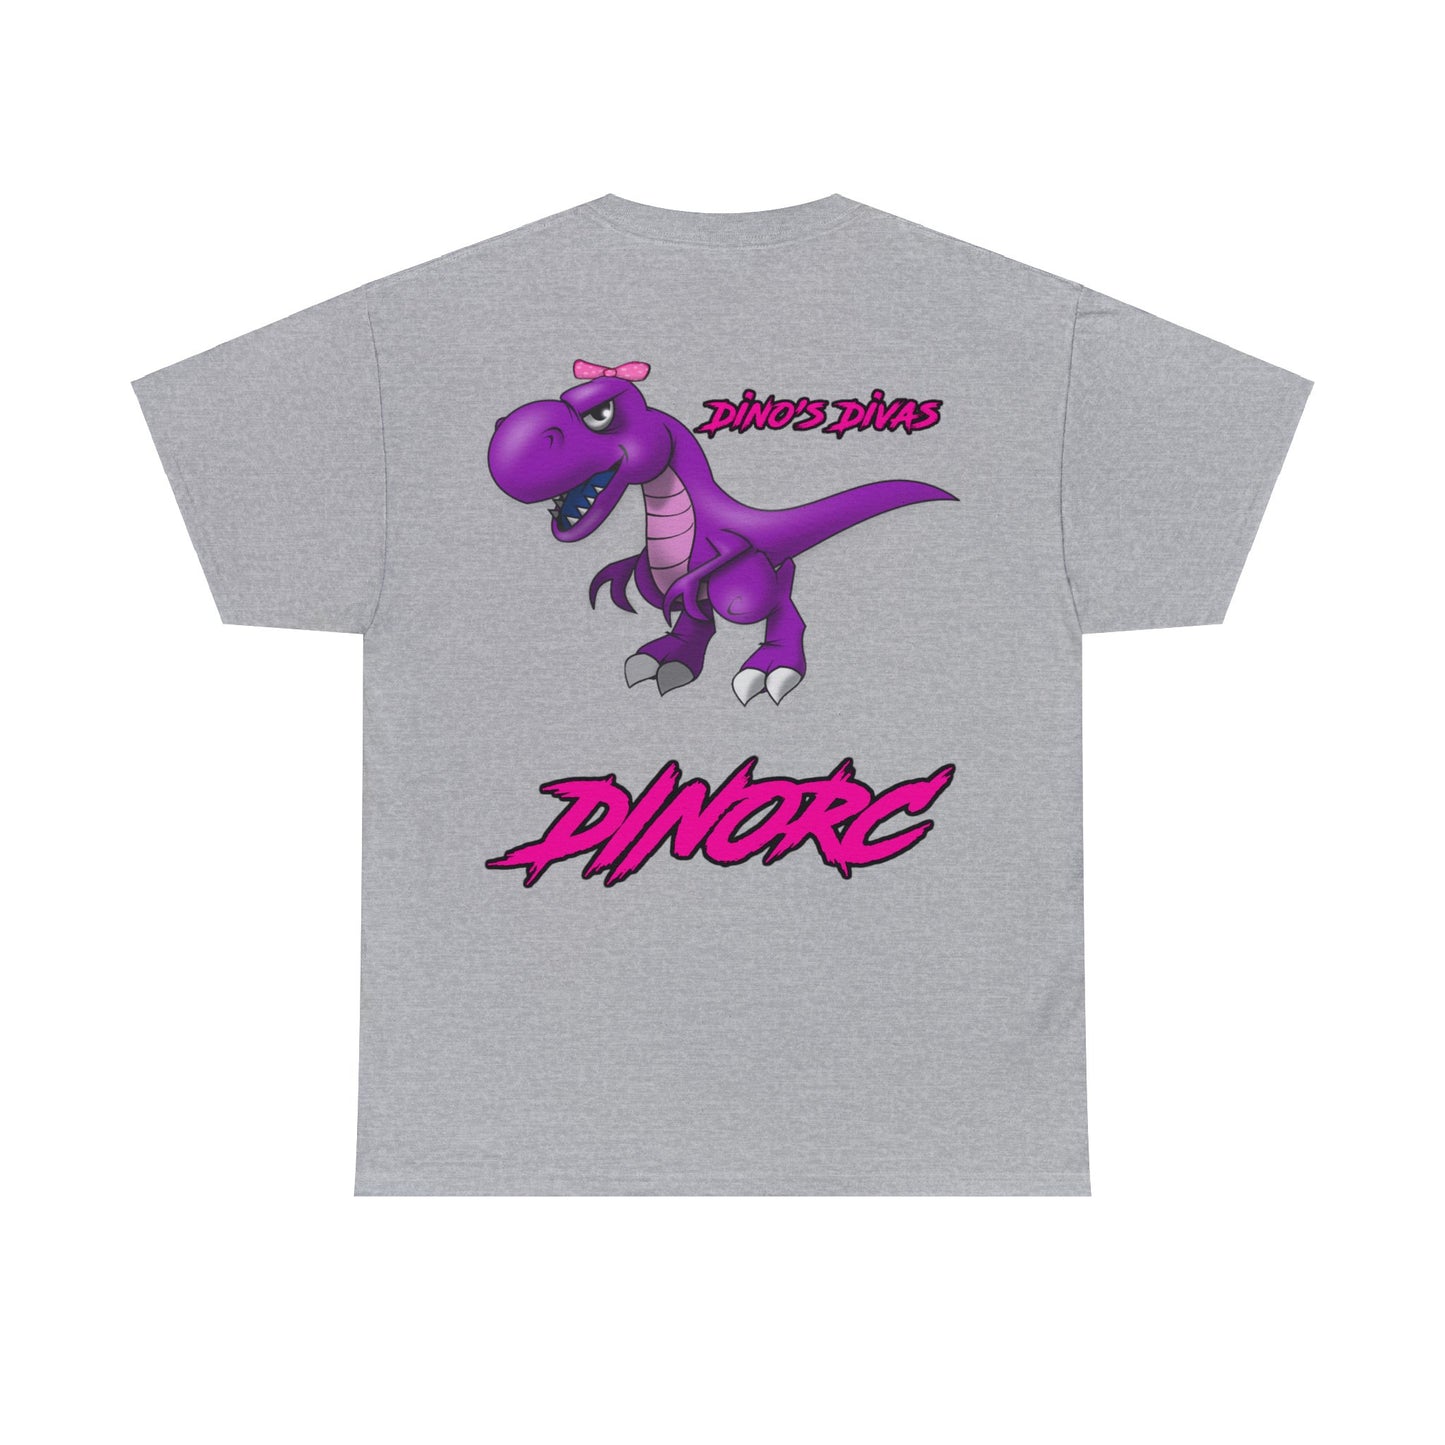 Dino's Divas DinoRc Logo Back of T-Shirt S-5x